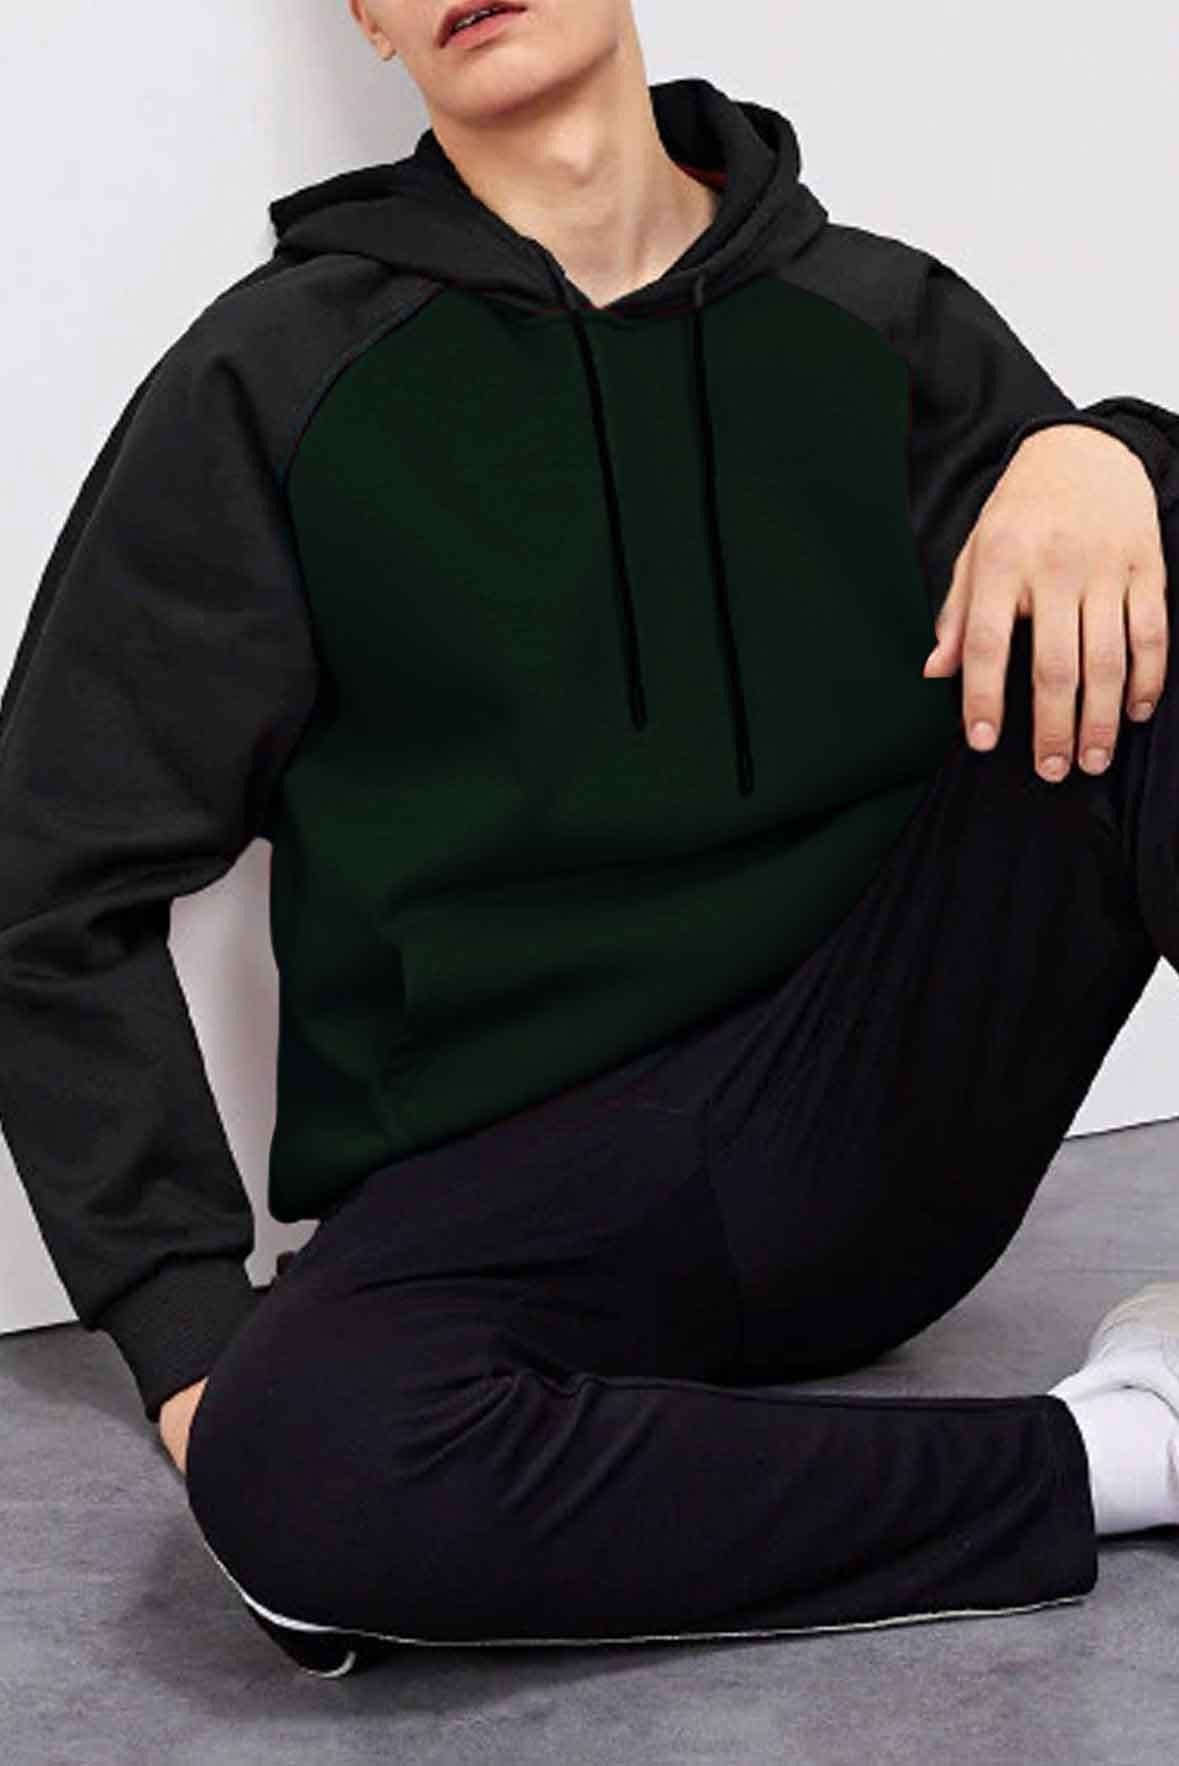 Green and black hoodie